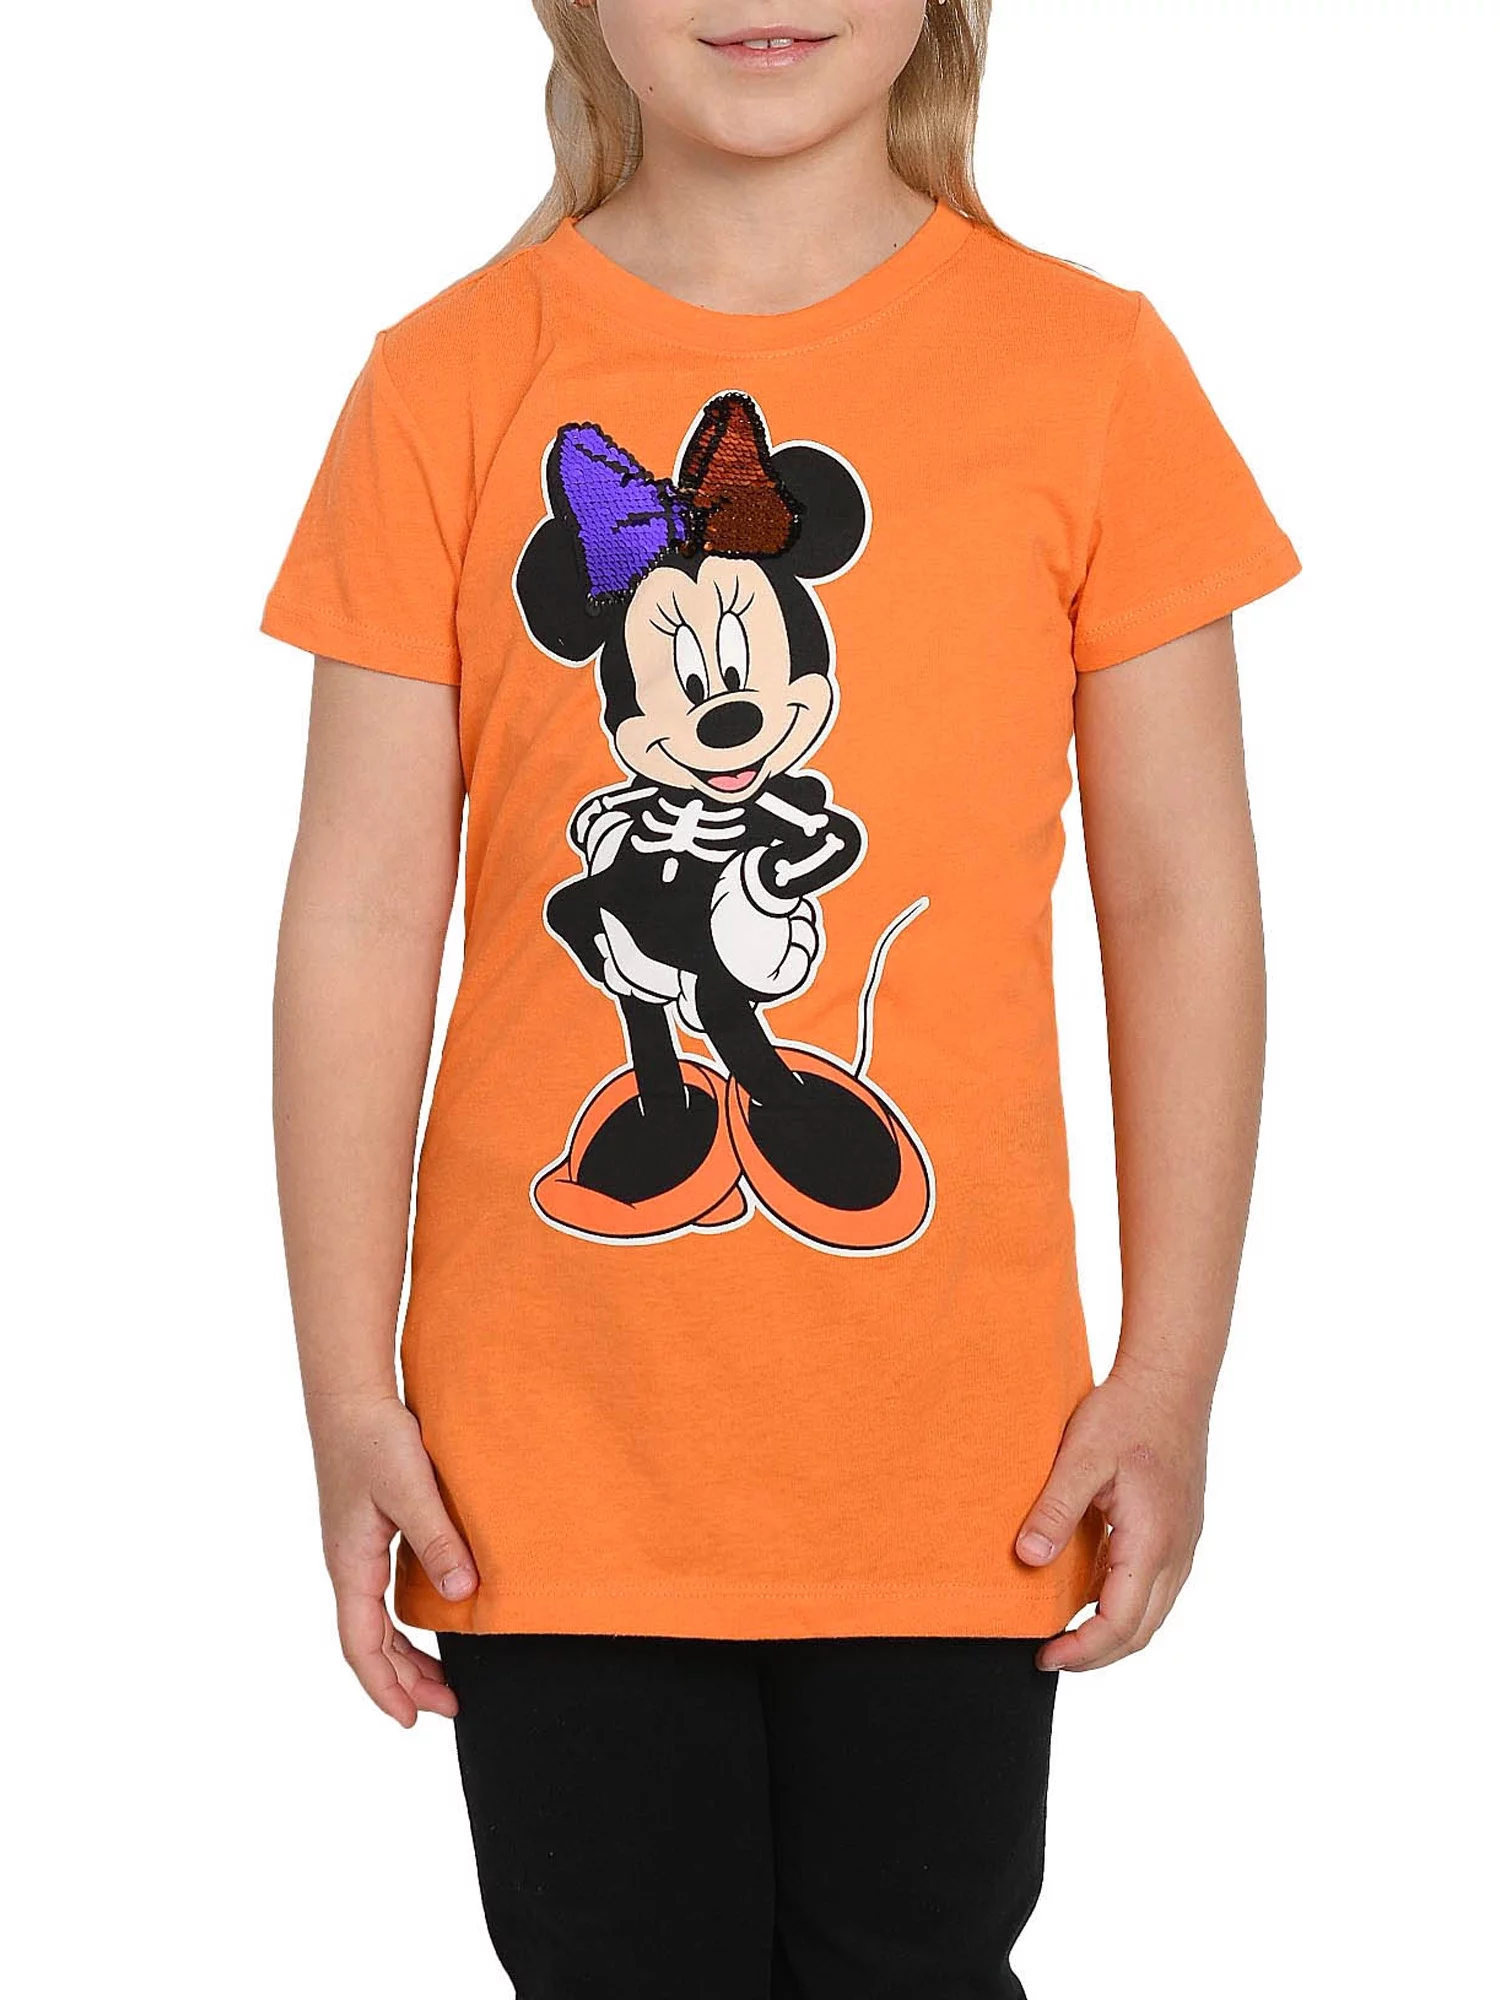 Girls Disney Minnie Mouse Skeleton T-Shirt Orange Reversible Sequins